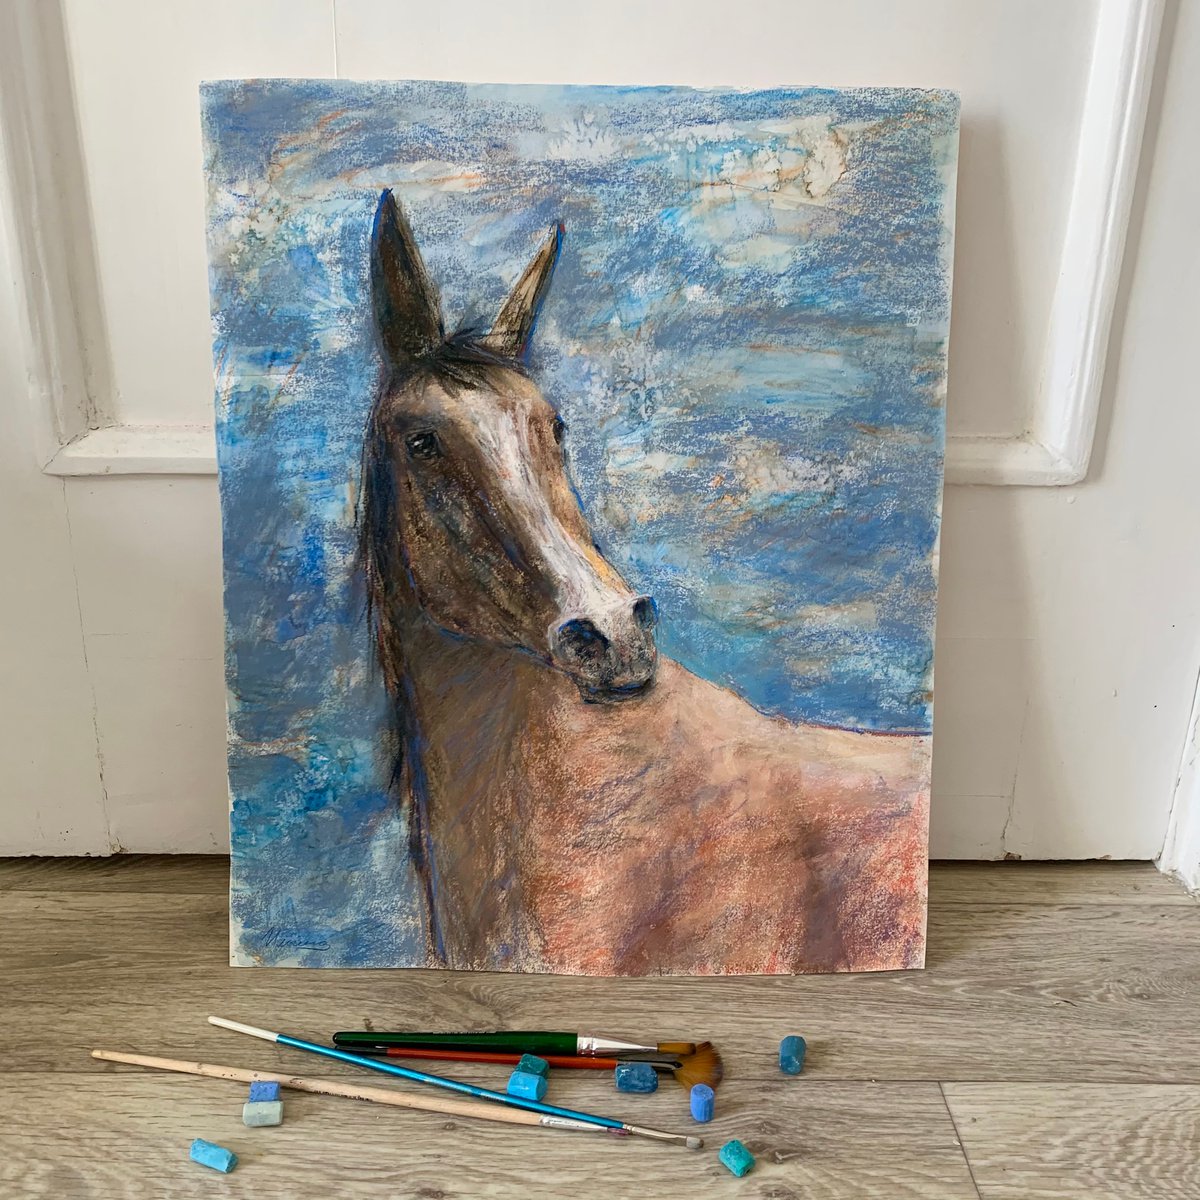 BLUE HORSE - Pastel and watercolor drawing on paper, original gift, mustang, home interior... by Tatsiana Ilyina